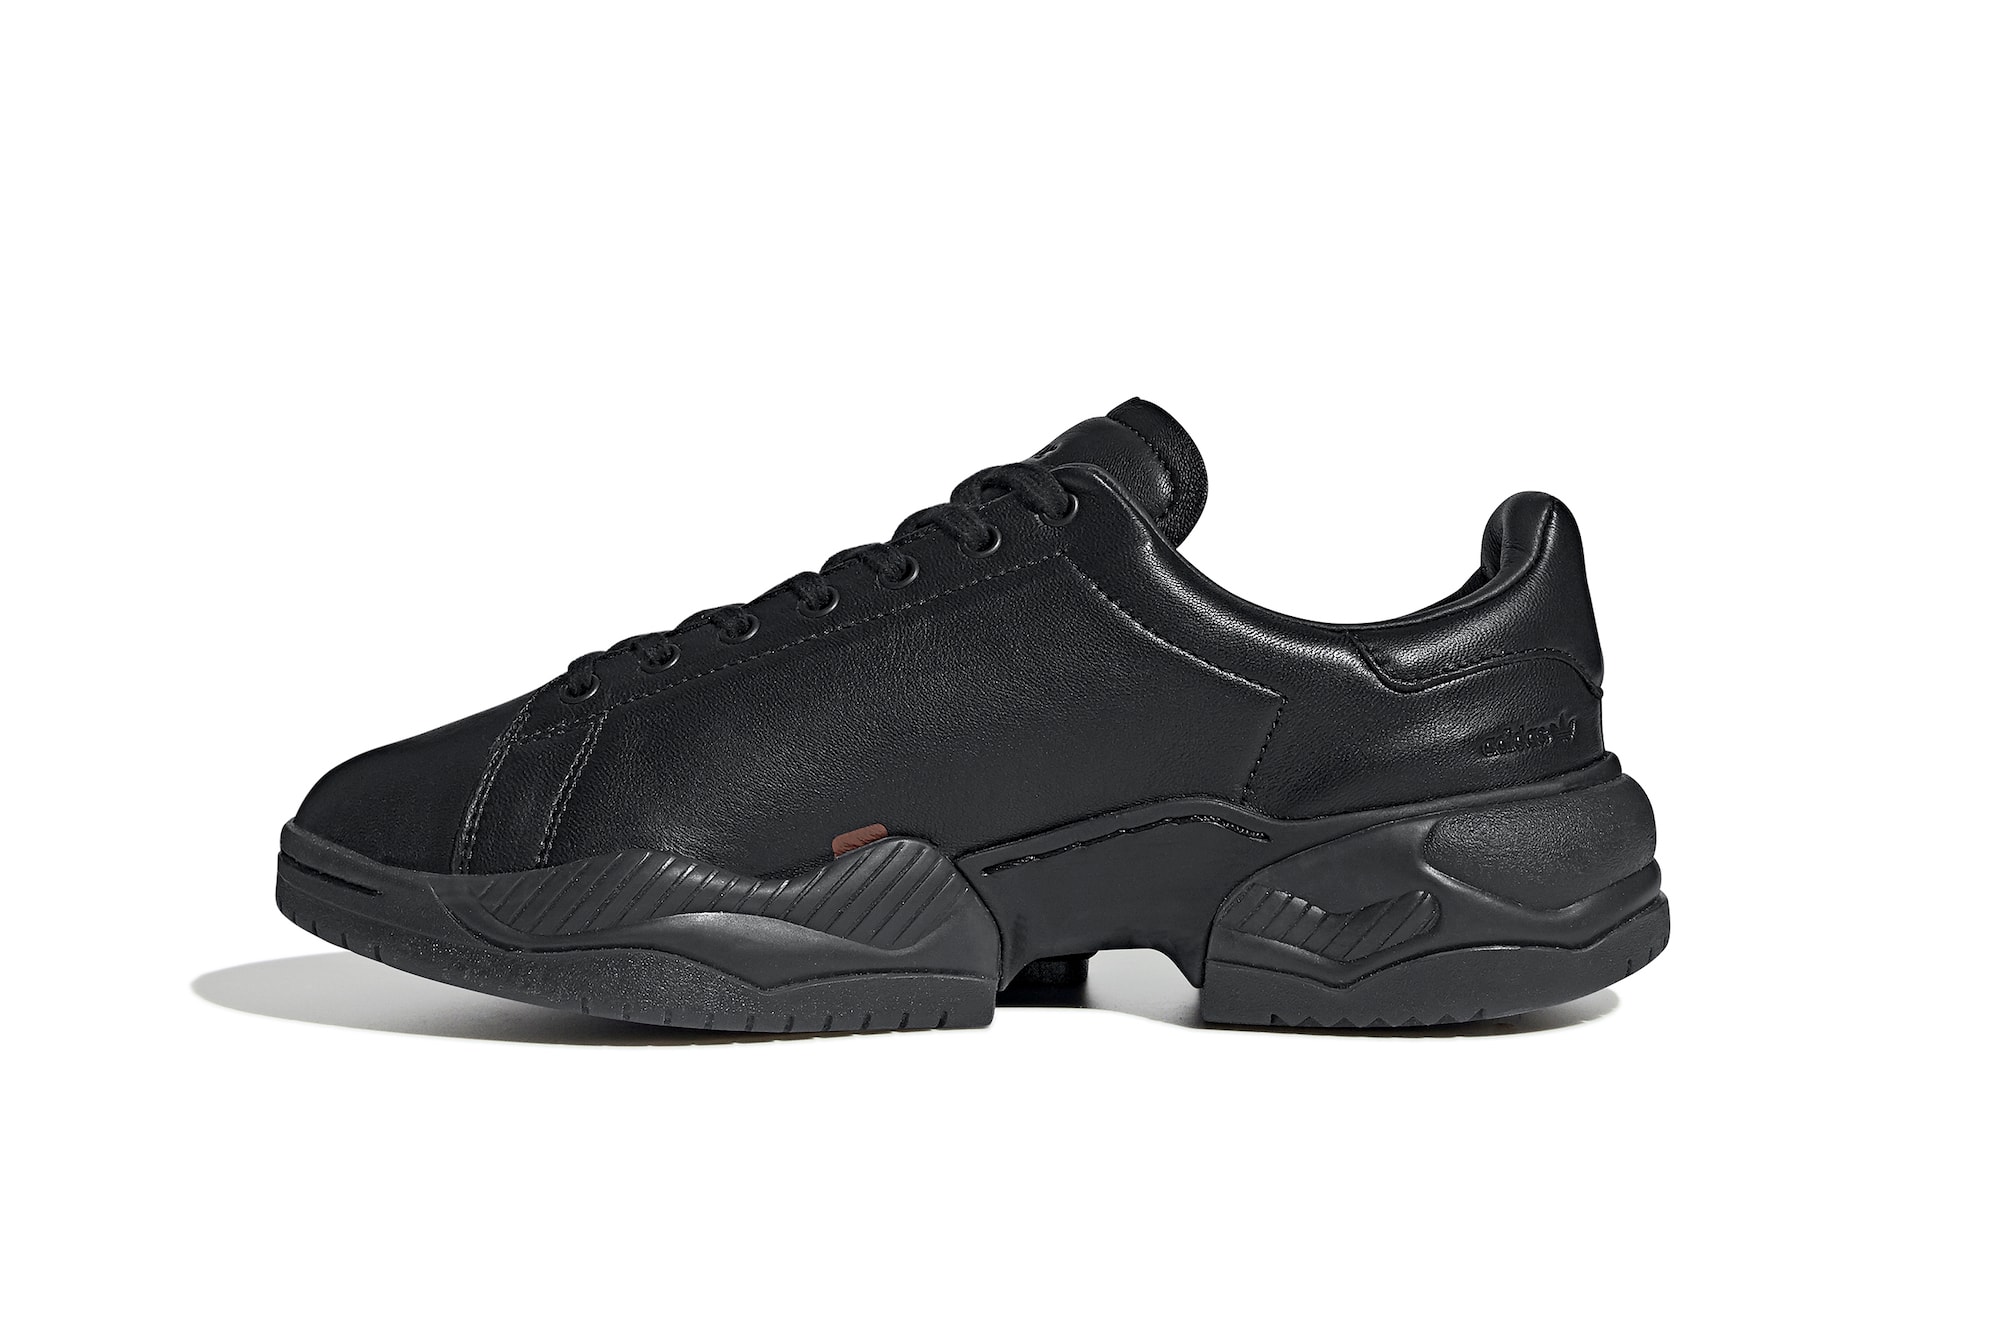 OAMC x adidas Originals Type O-2 Sneaker Release | Hypebae